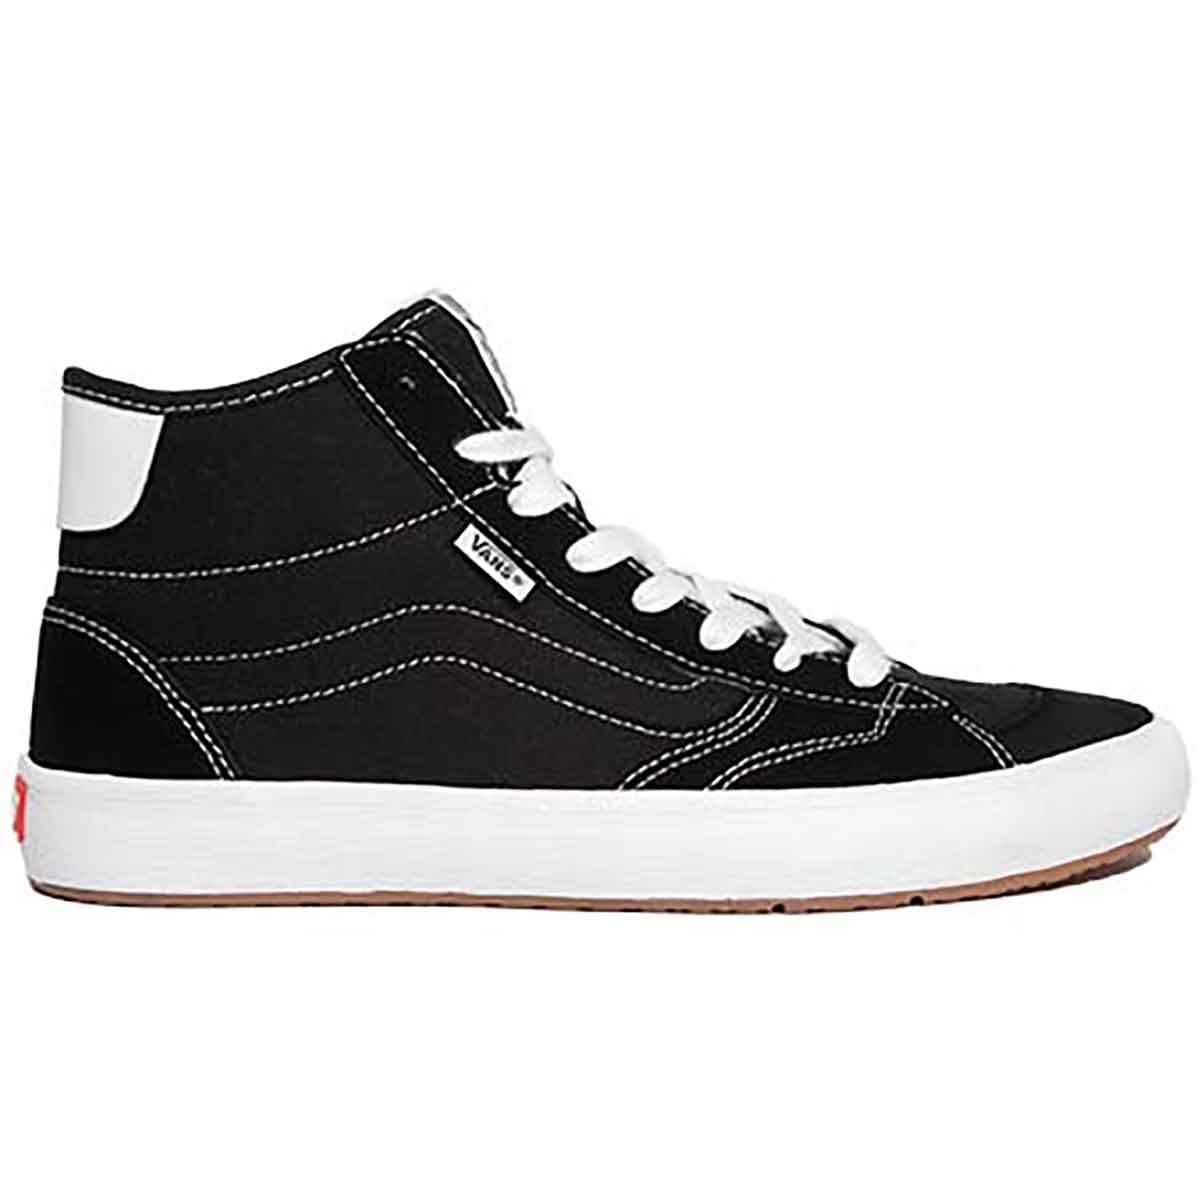 Vans Skate The Lizzie Shoes - Black/White